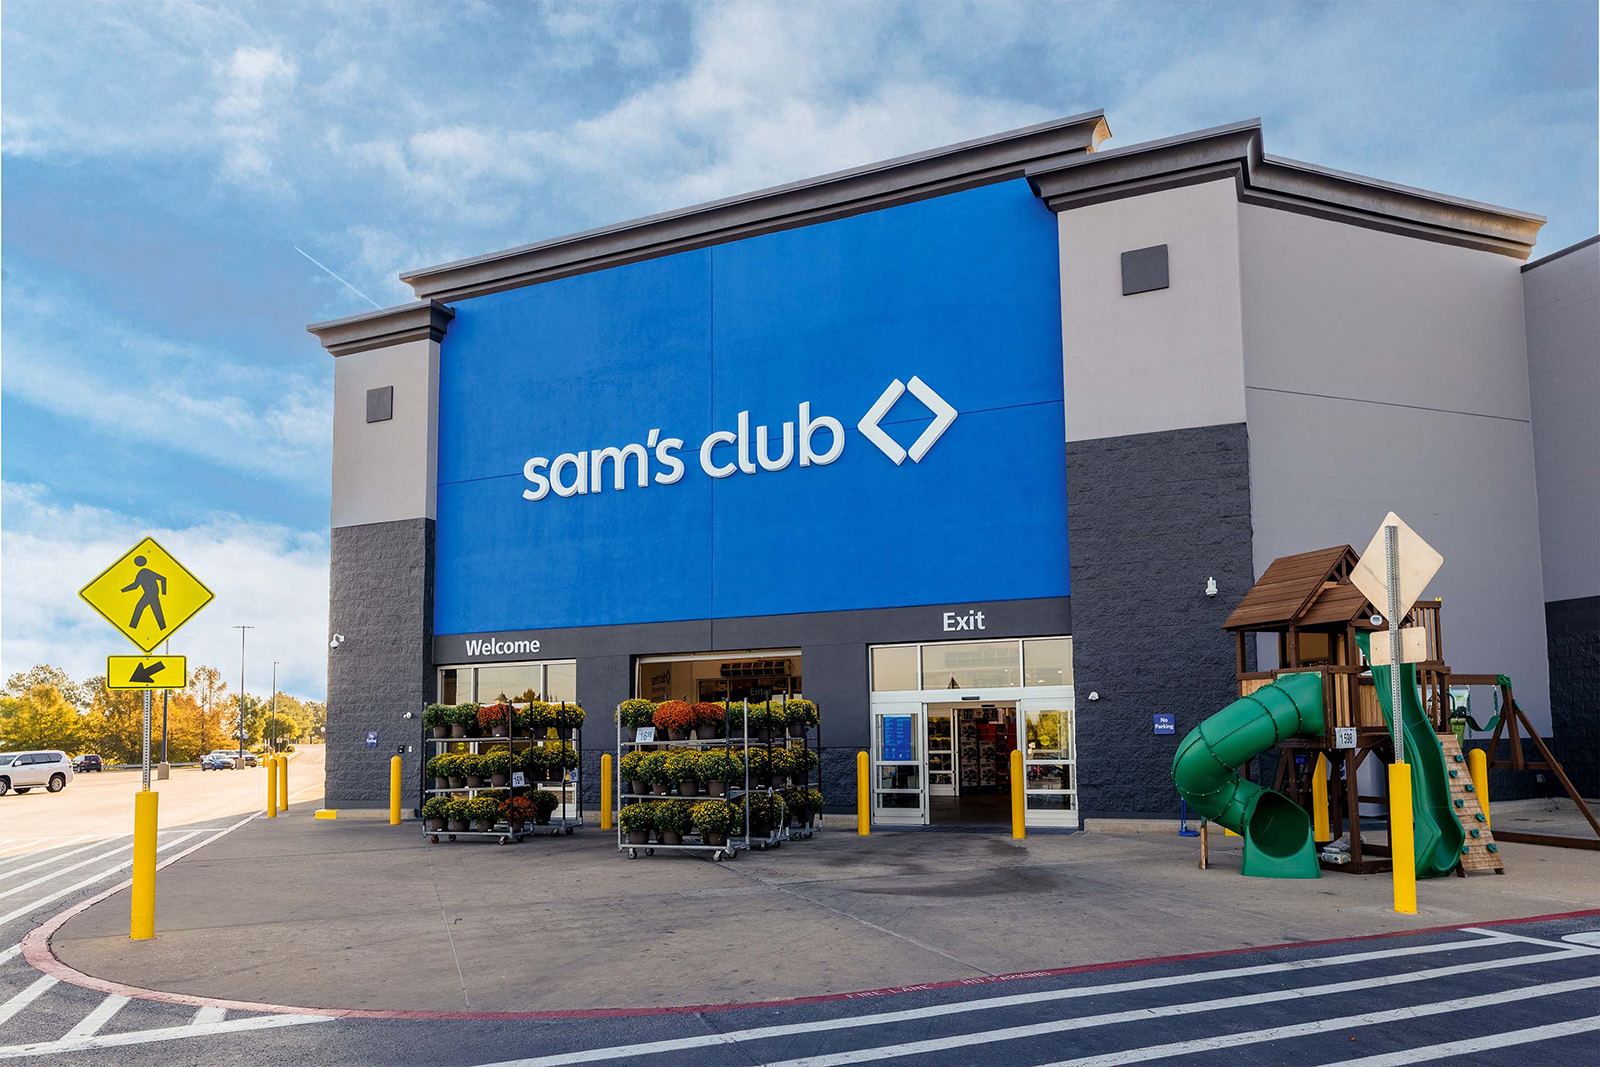 Sams Club Exterior With New Logo